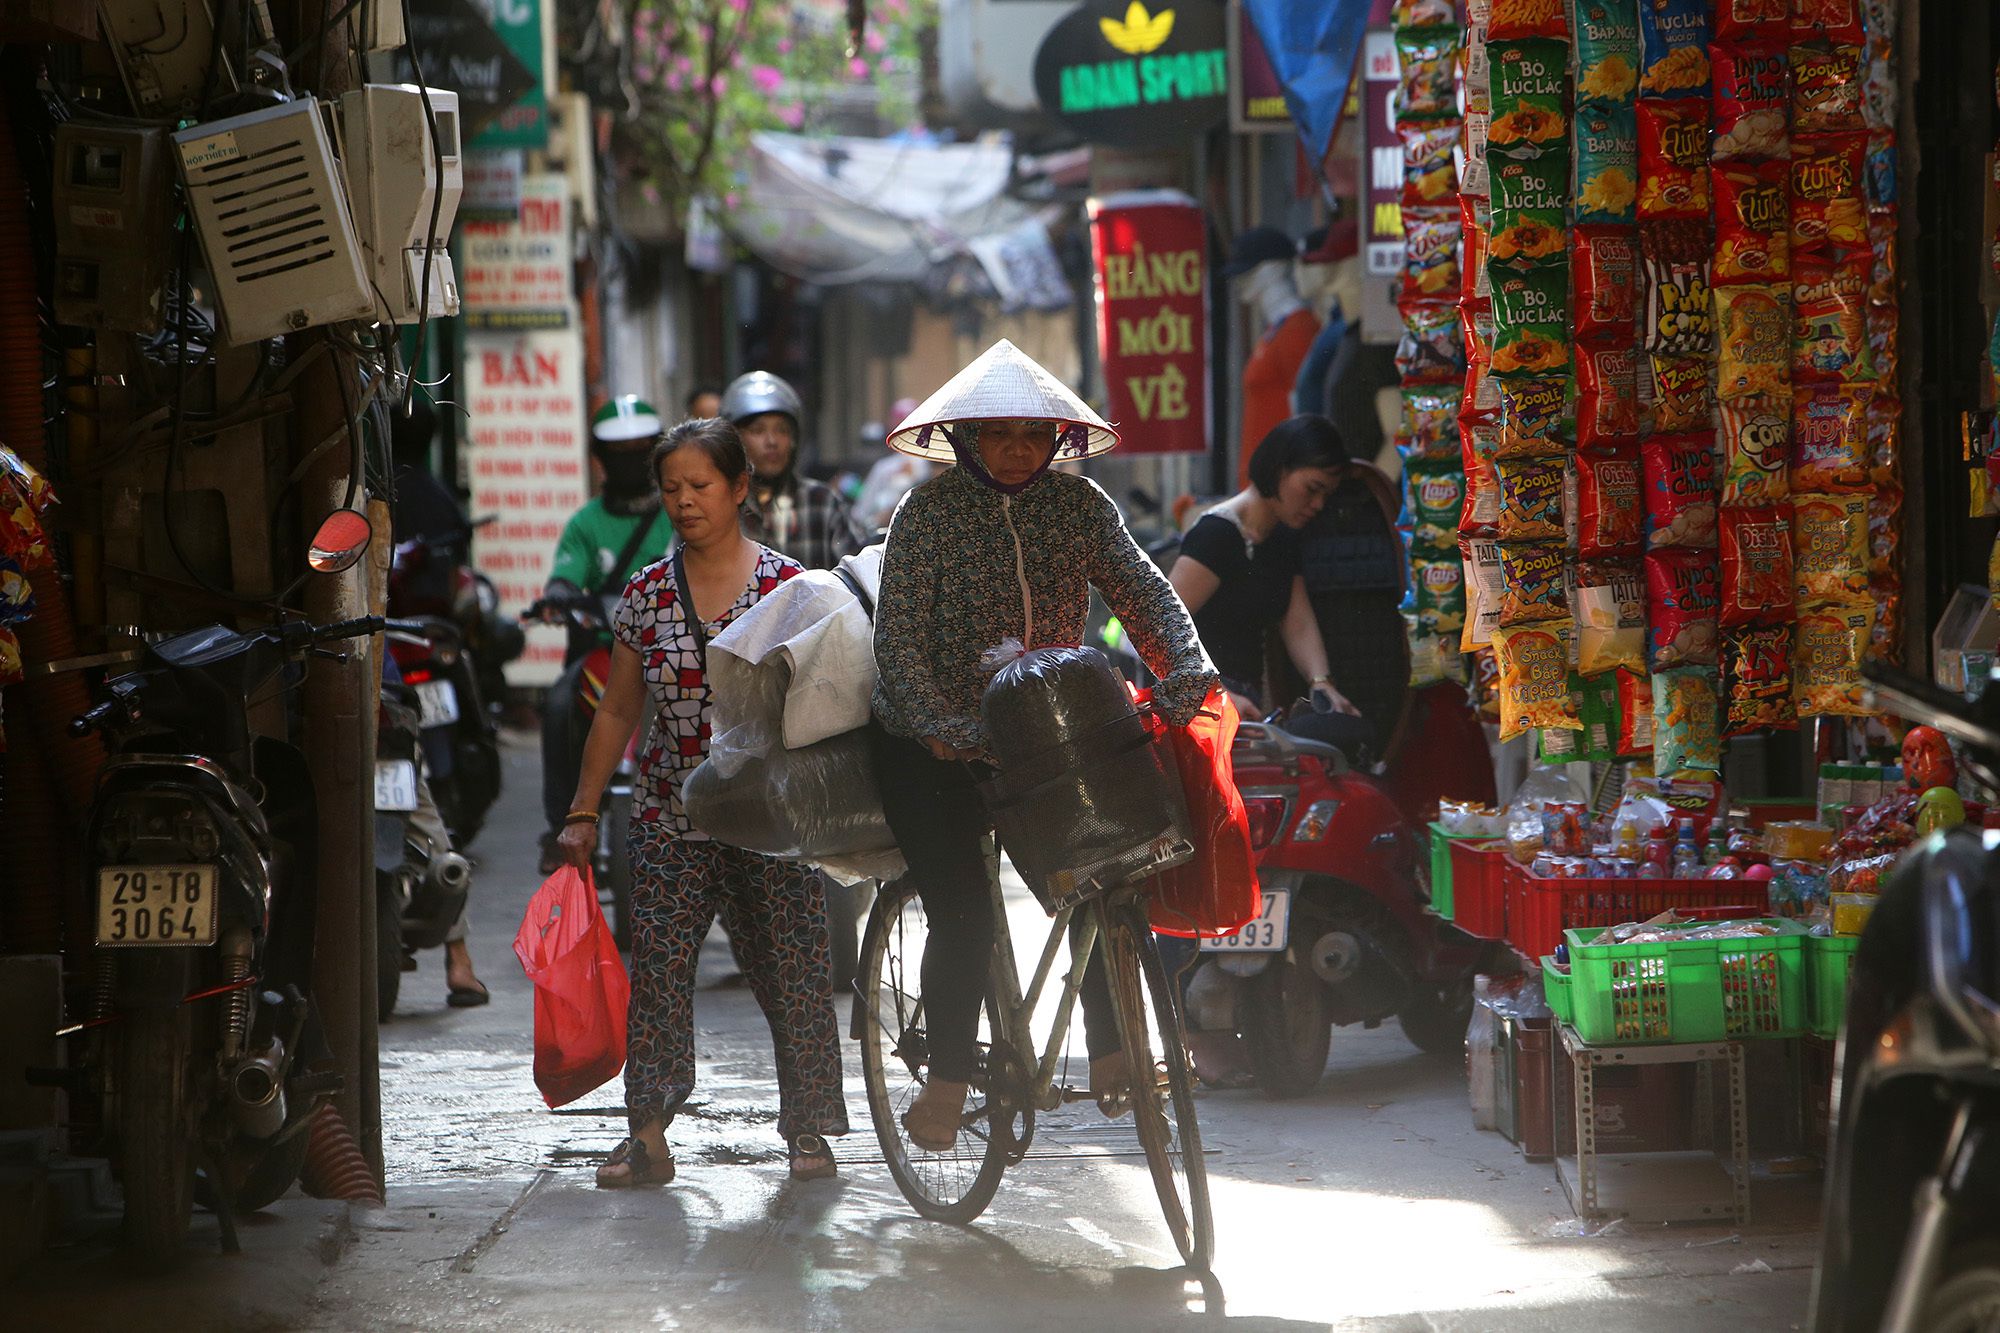 Hanoi's special lane in photos